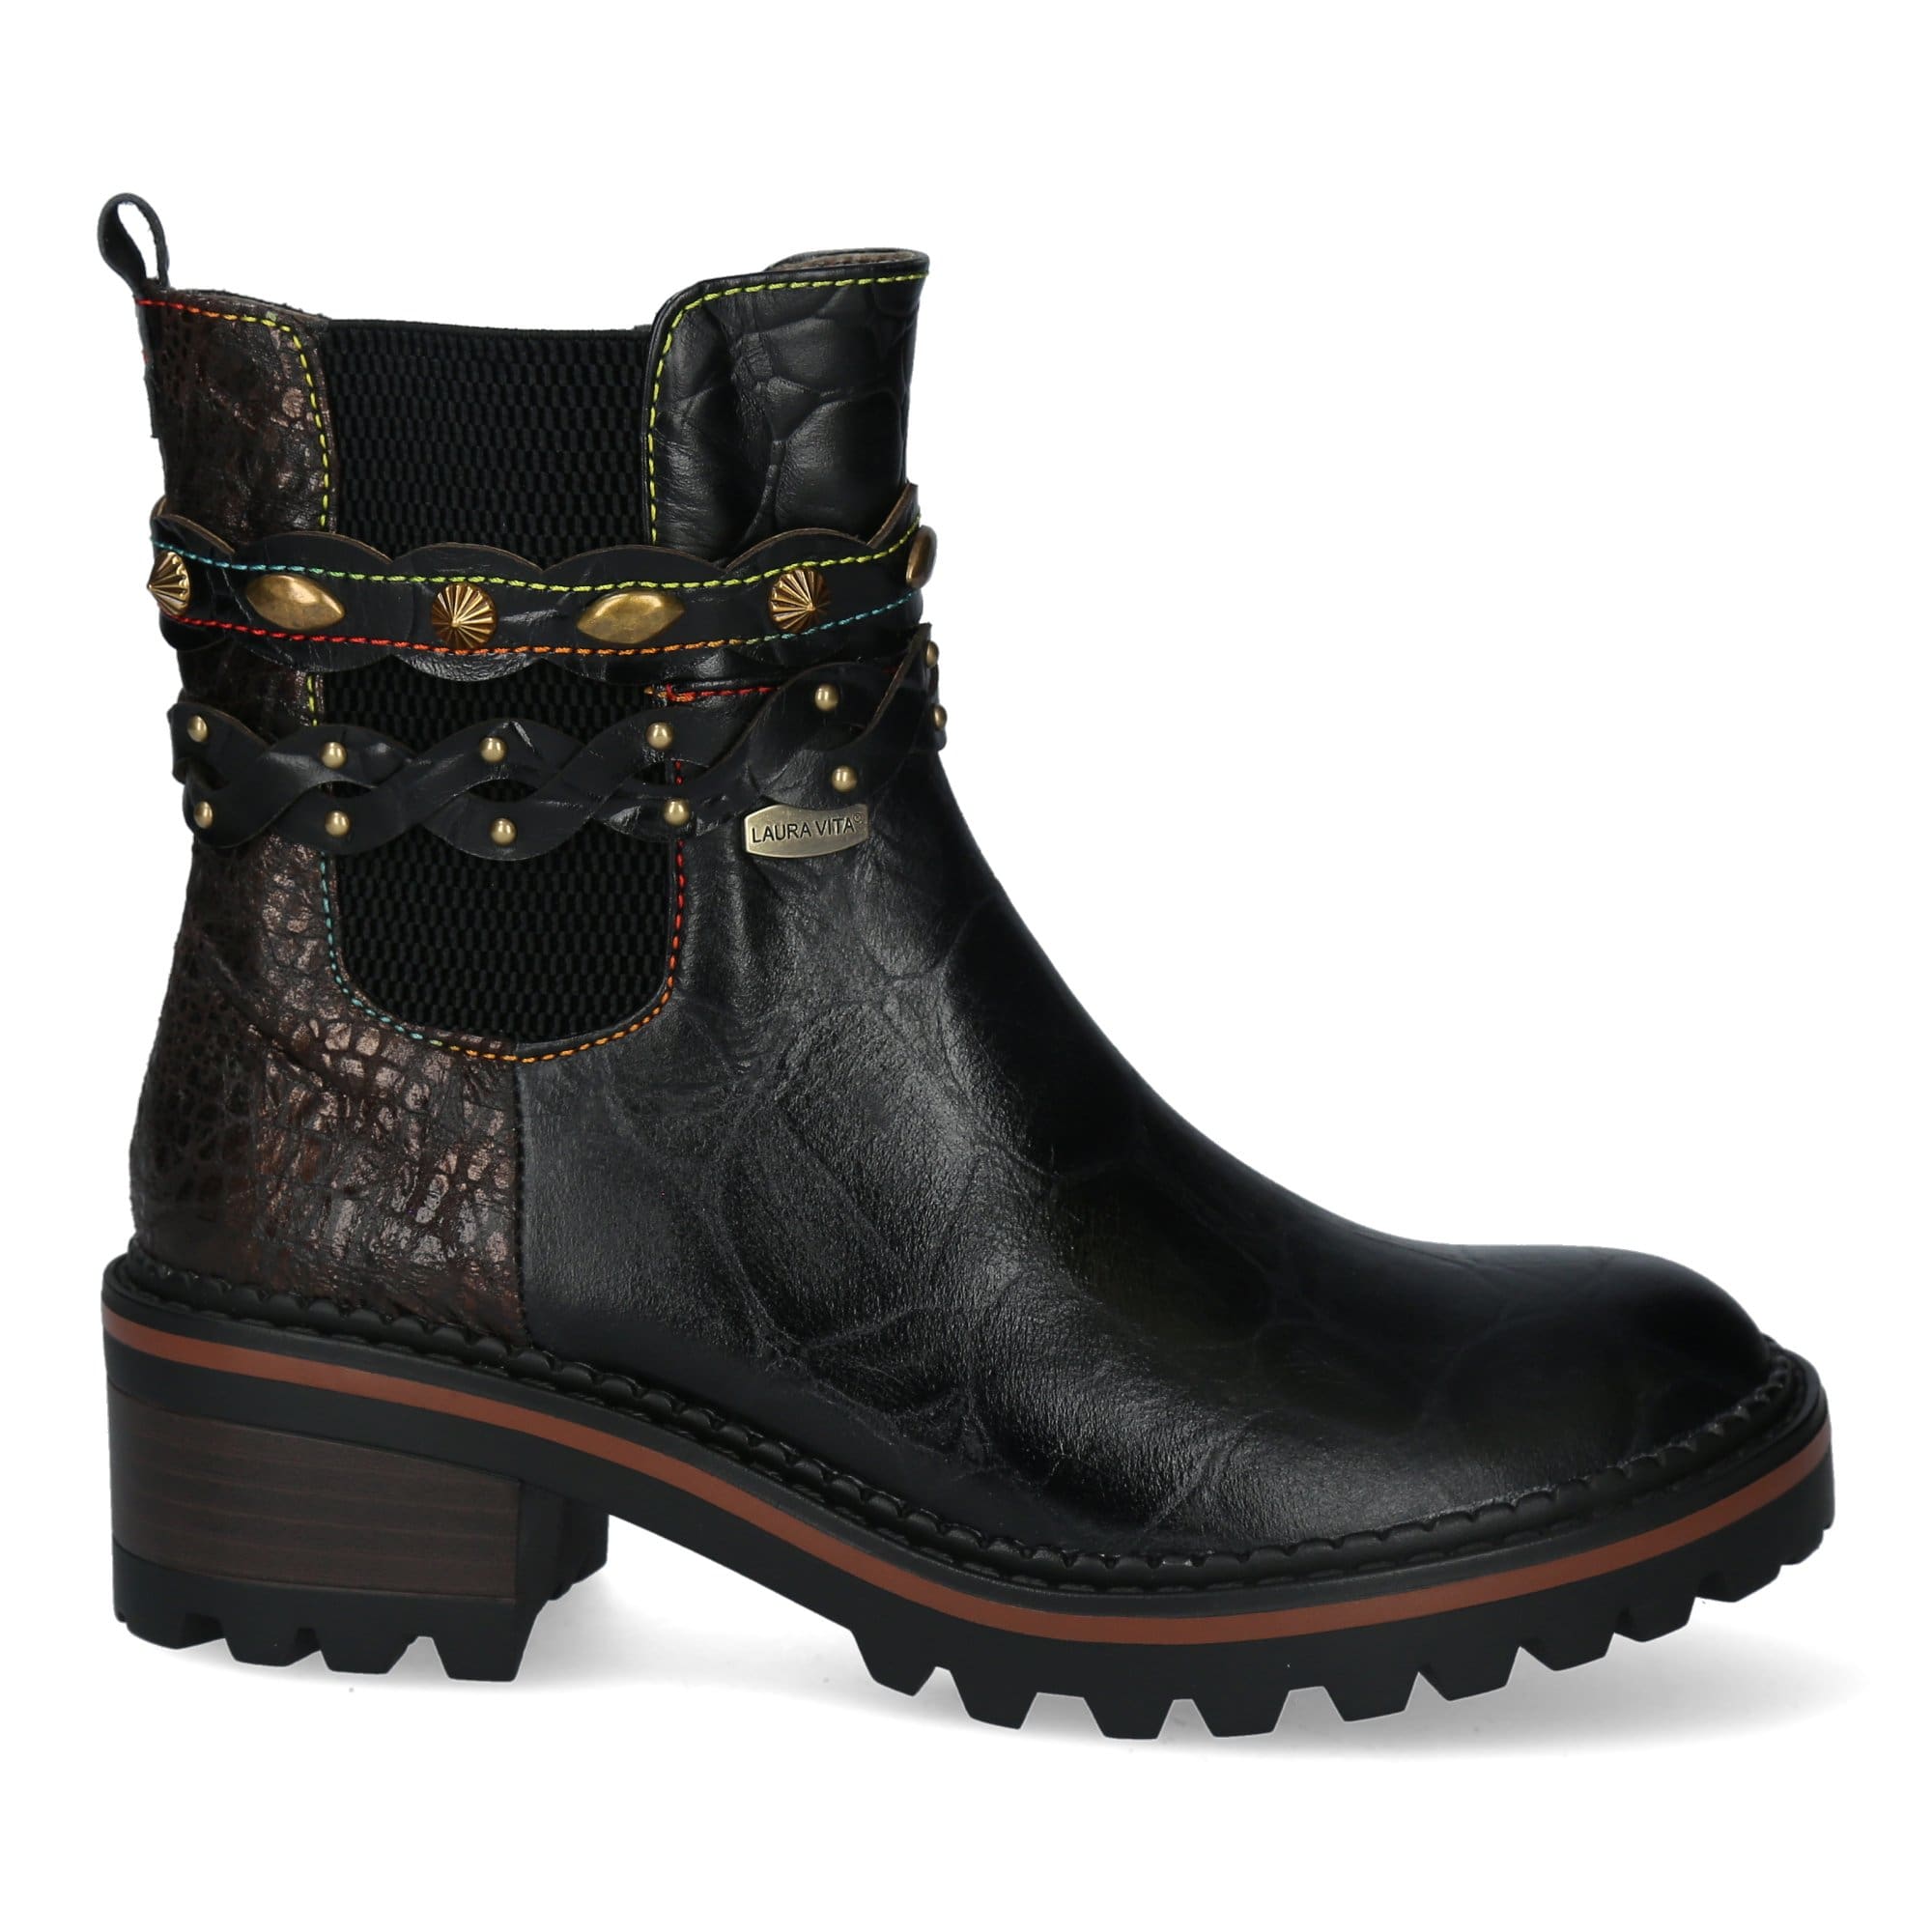 KESSO 03 - 35 / Black - Boots